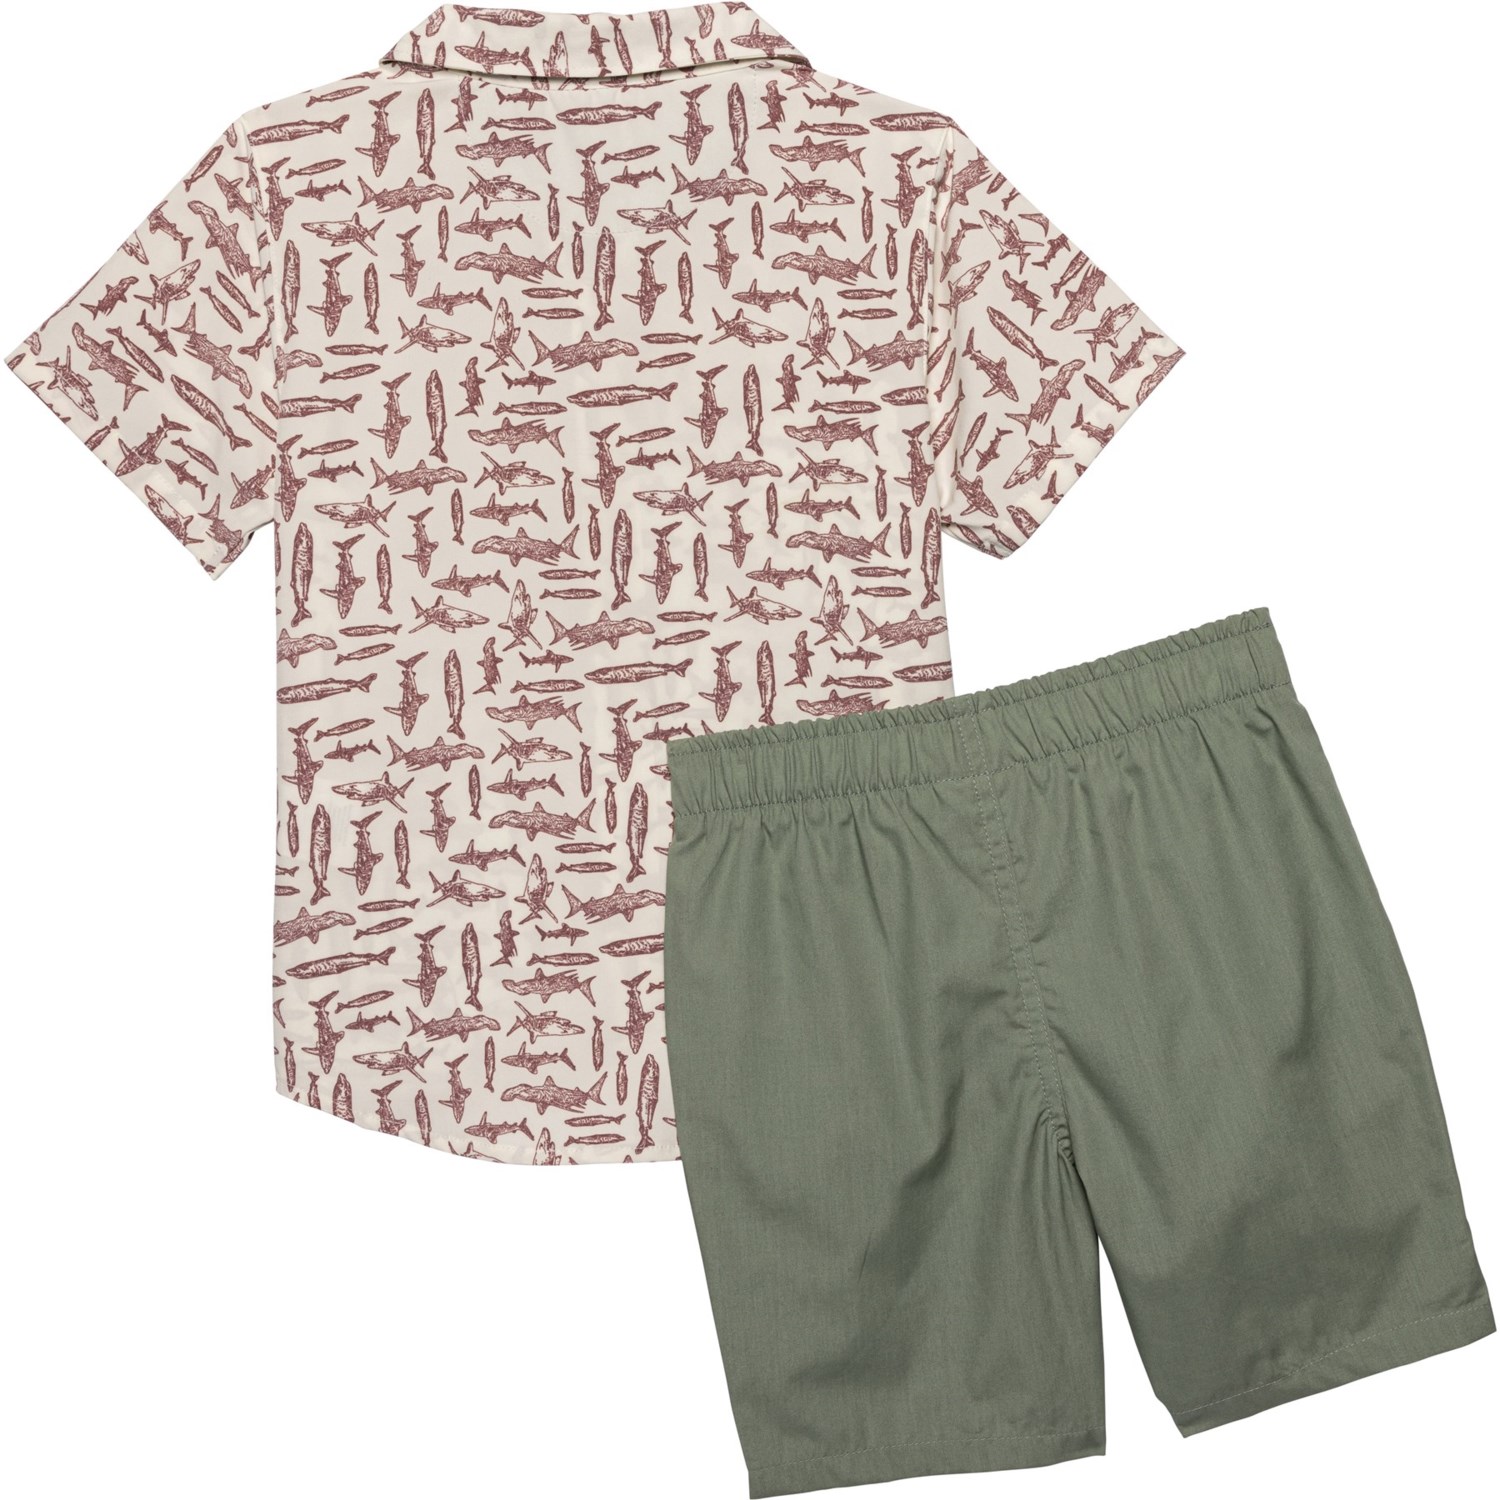 Eddie Bauer Little Boys Tech Woven Shirt and Shorts Set - Short Sleeve -  Save 42%